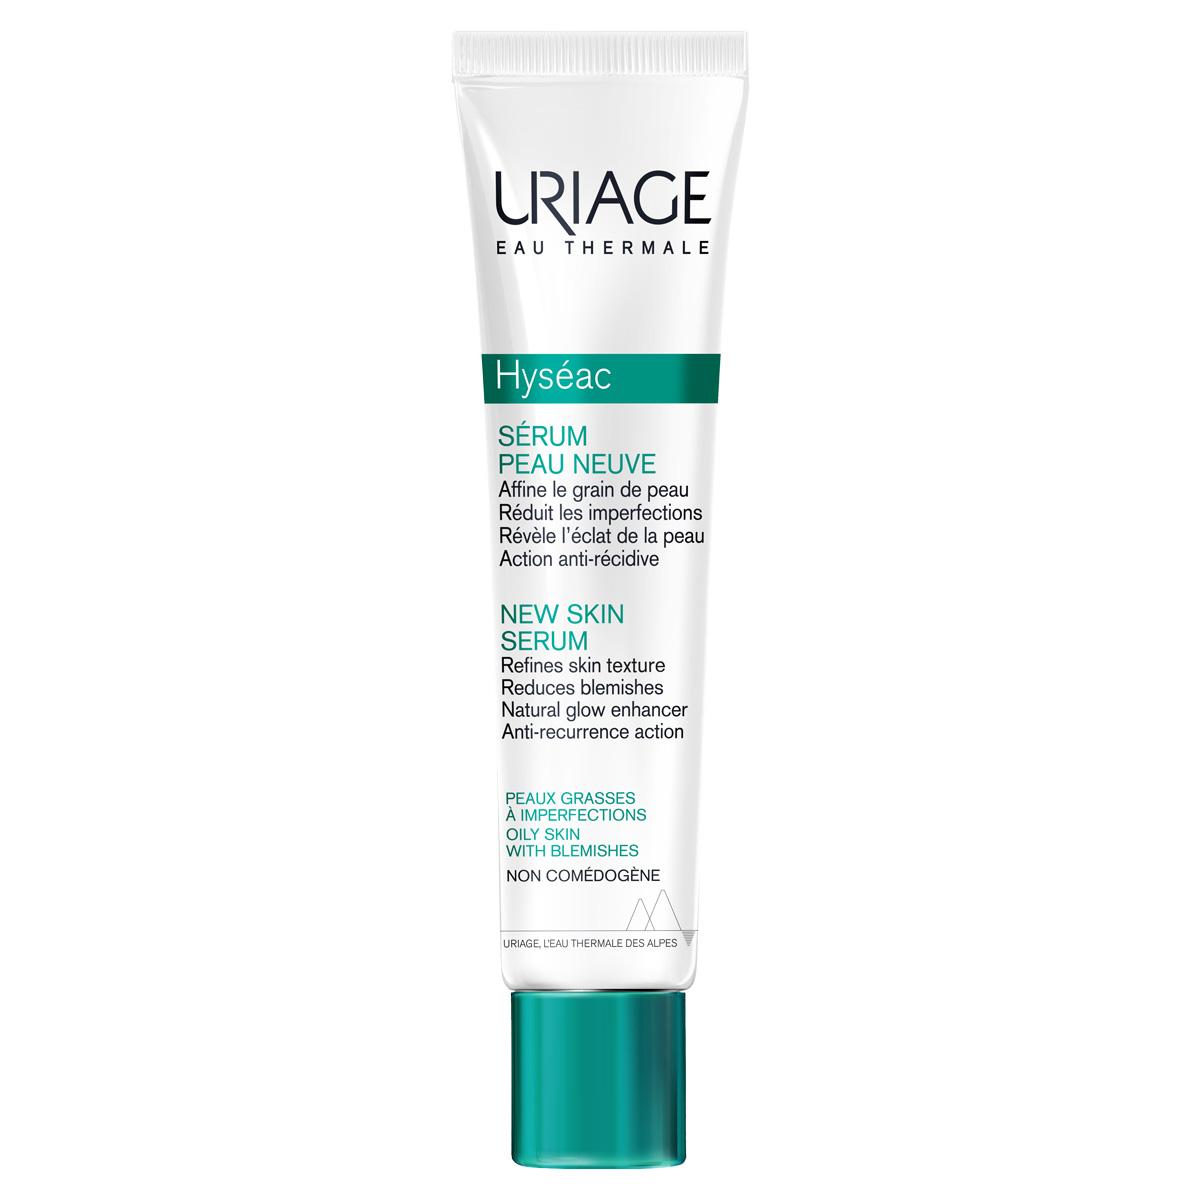 Uriage Обновляющая кожу сыворотка New Skin Serum, 40 мл (Uriage, Hyseac)